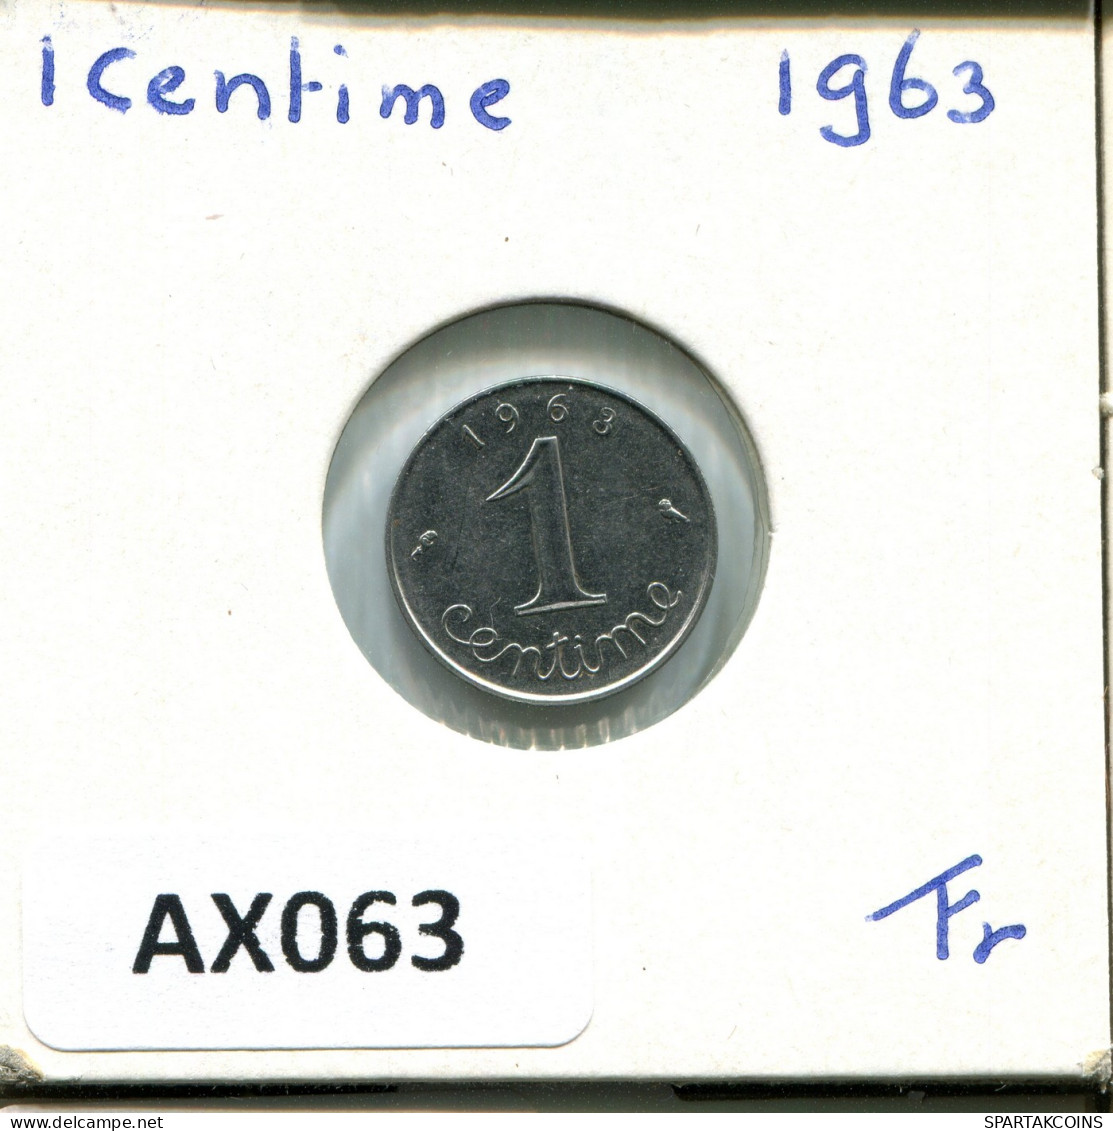 1 CENTIME 1963 FRANCE Pièce #AX063.F - 1 Centime